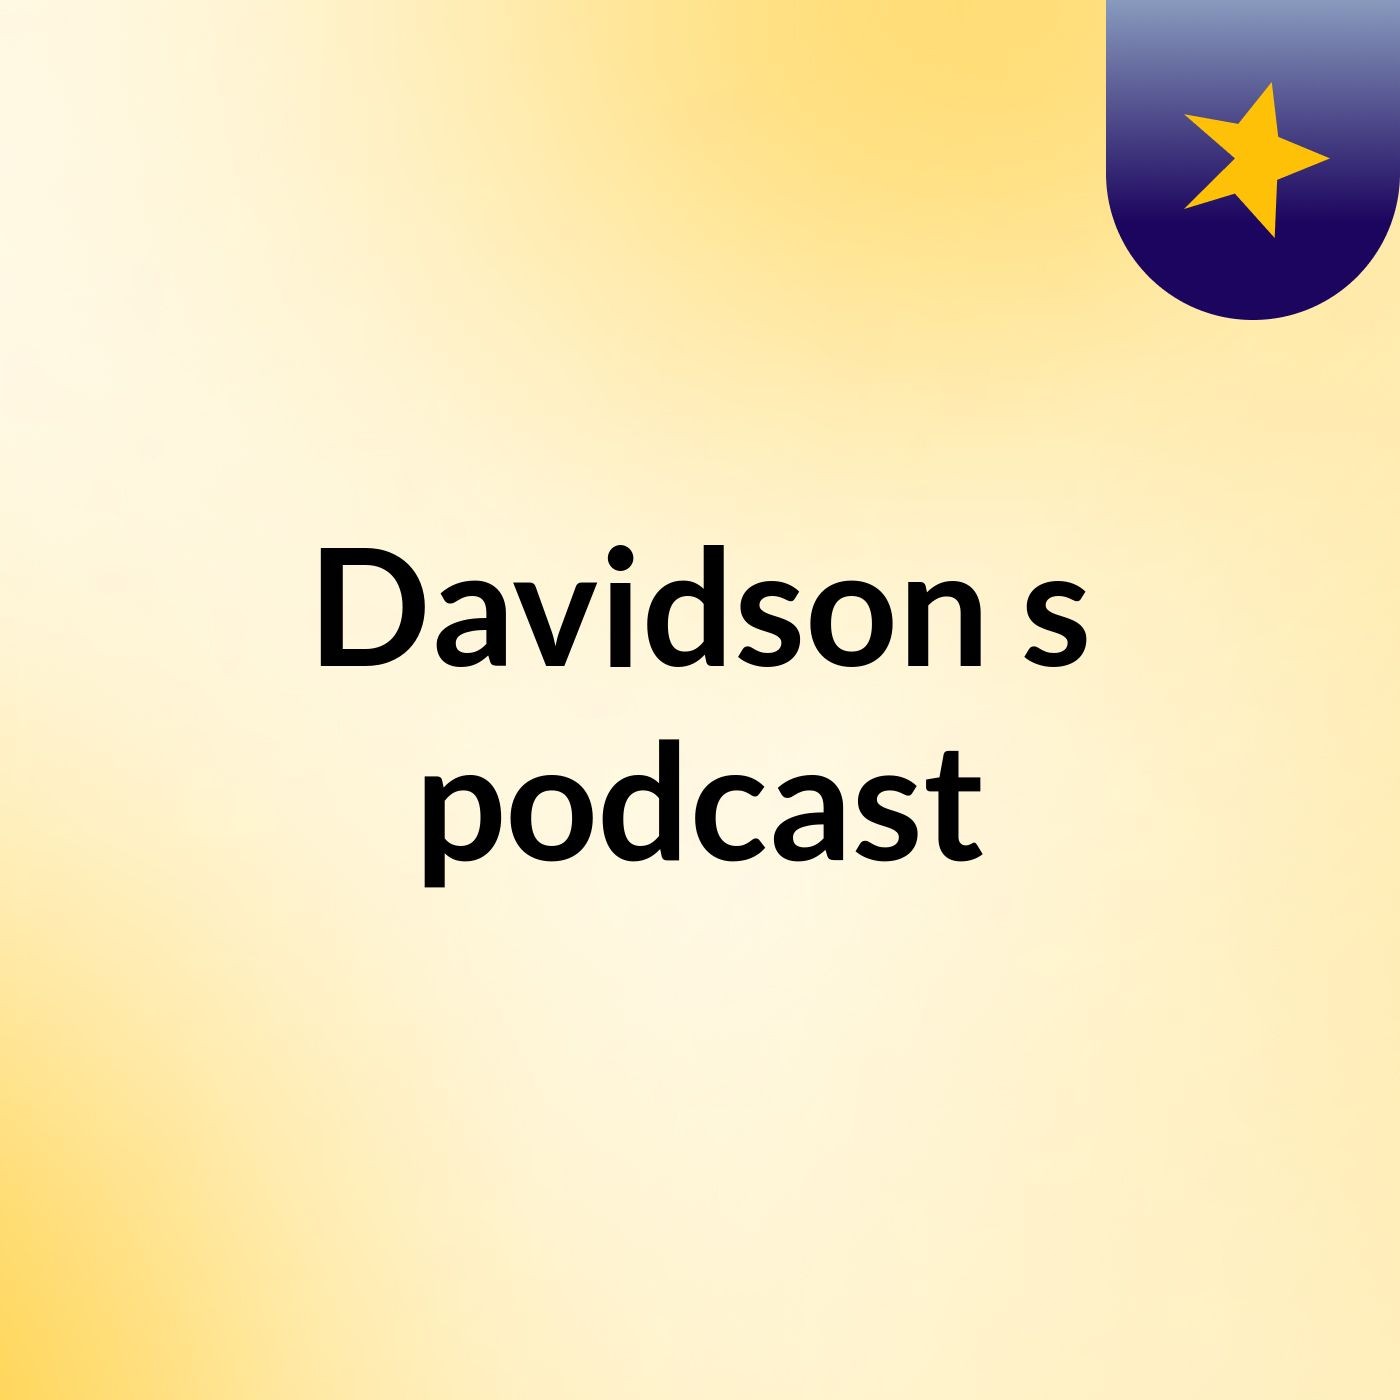 Davidson's podcast